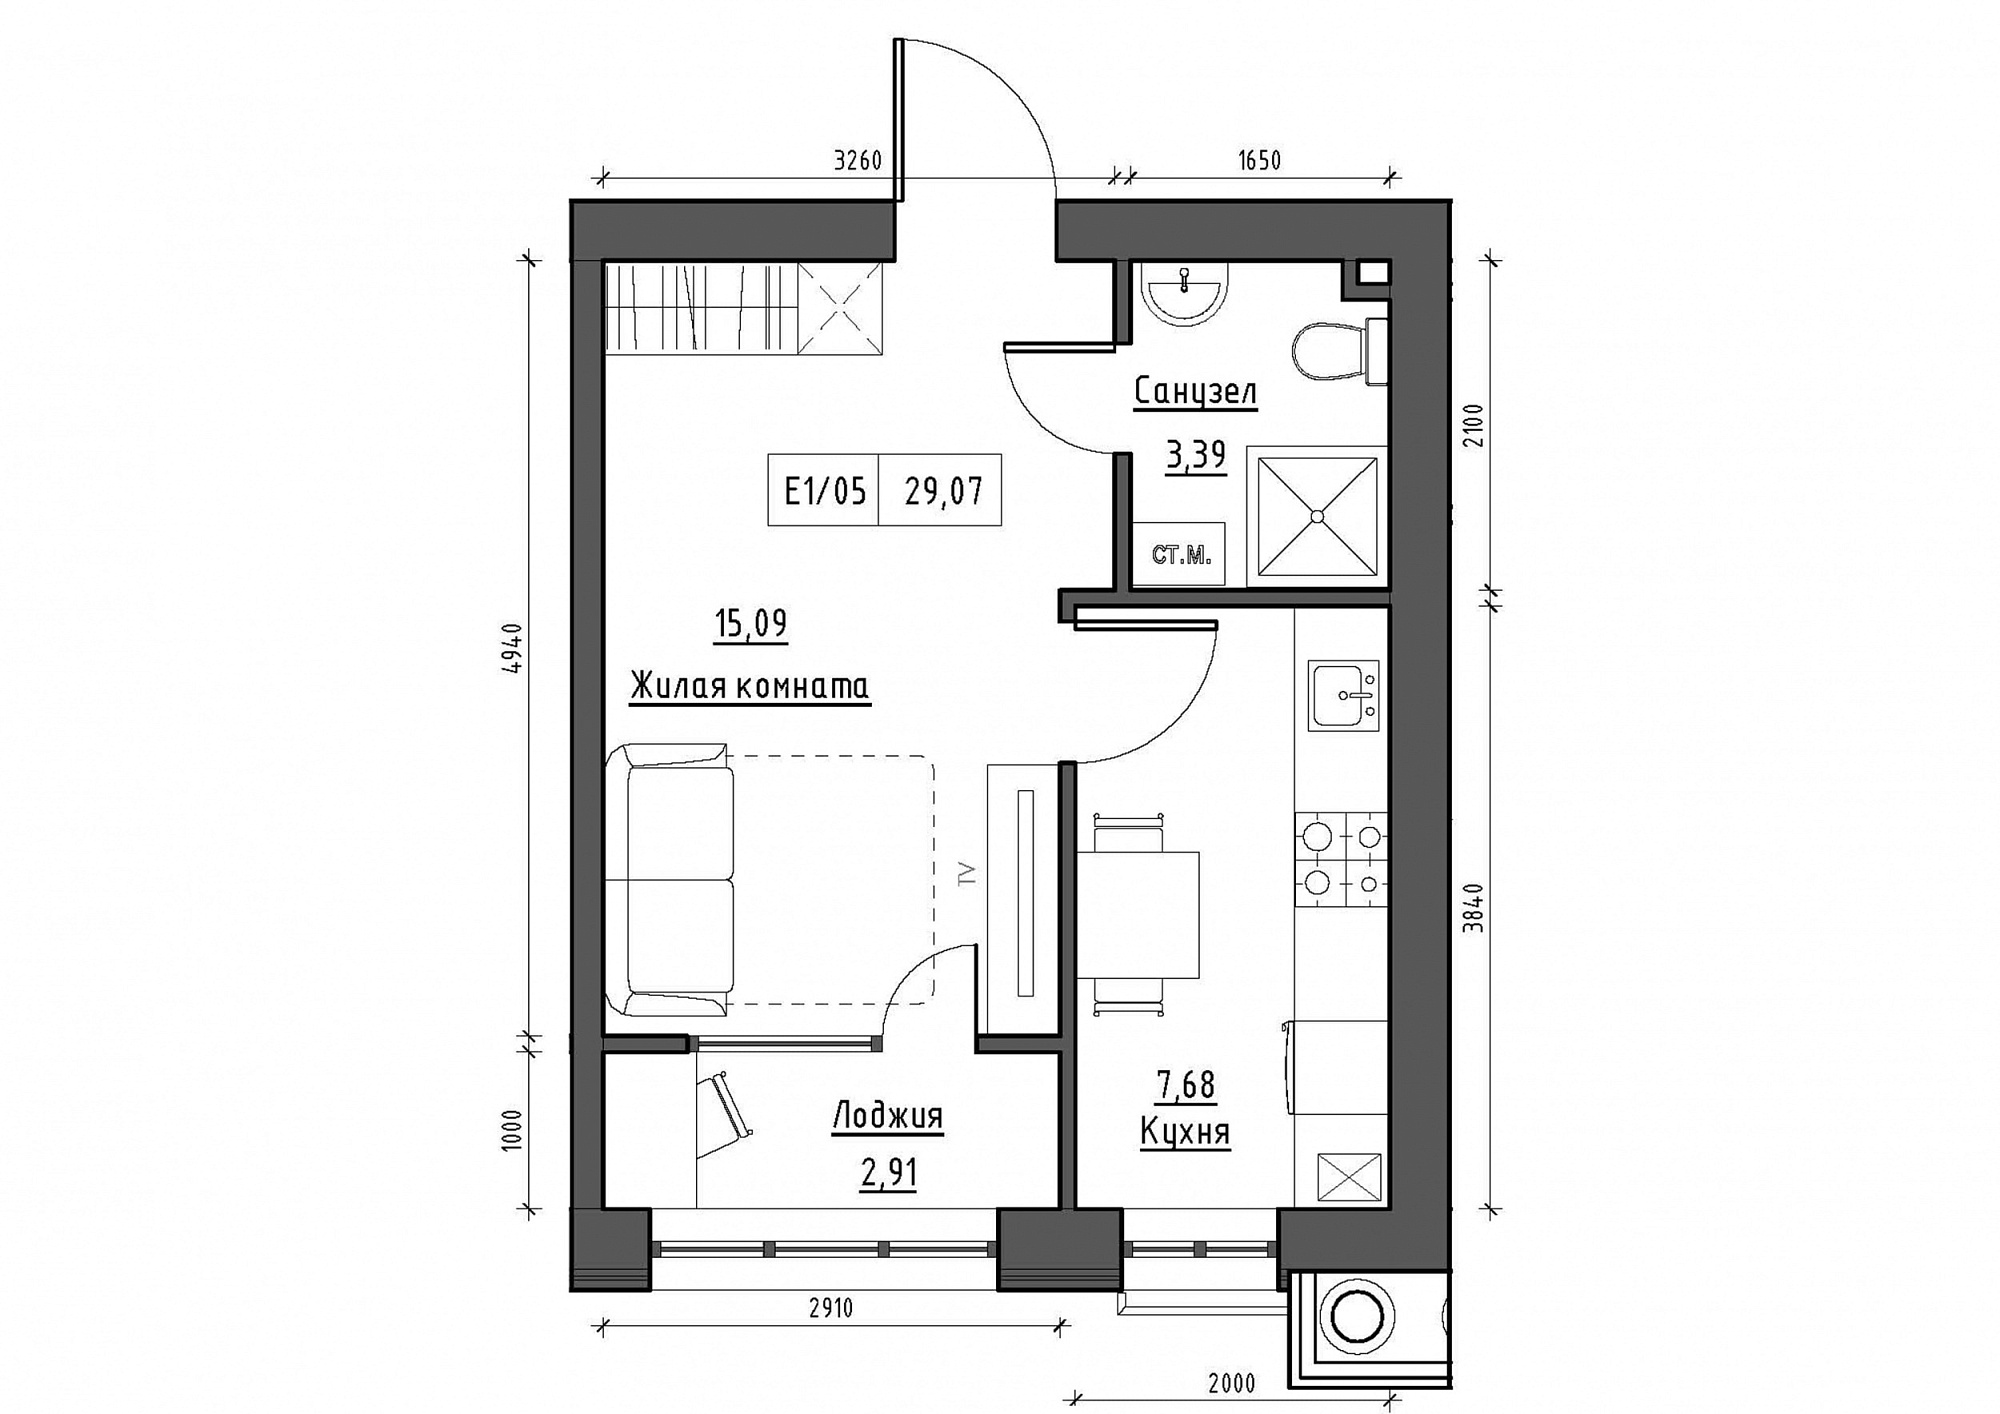 Planning 1-rm flats area 29.07m2, KS-011-02/0009.